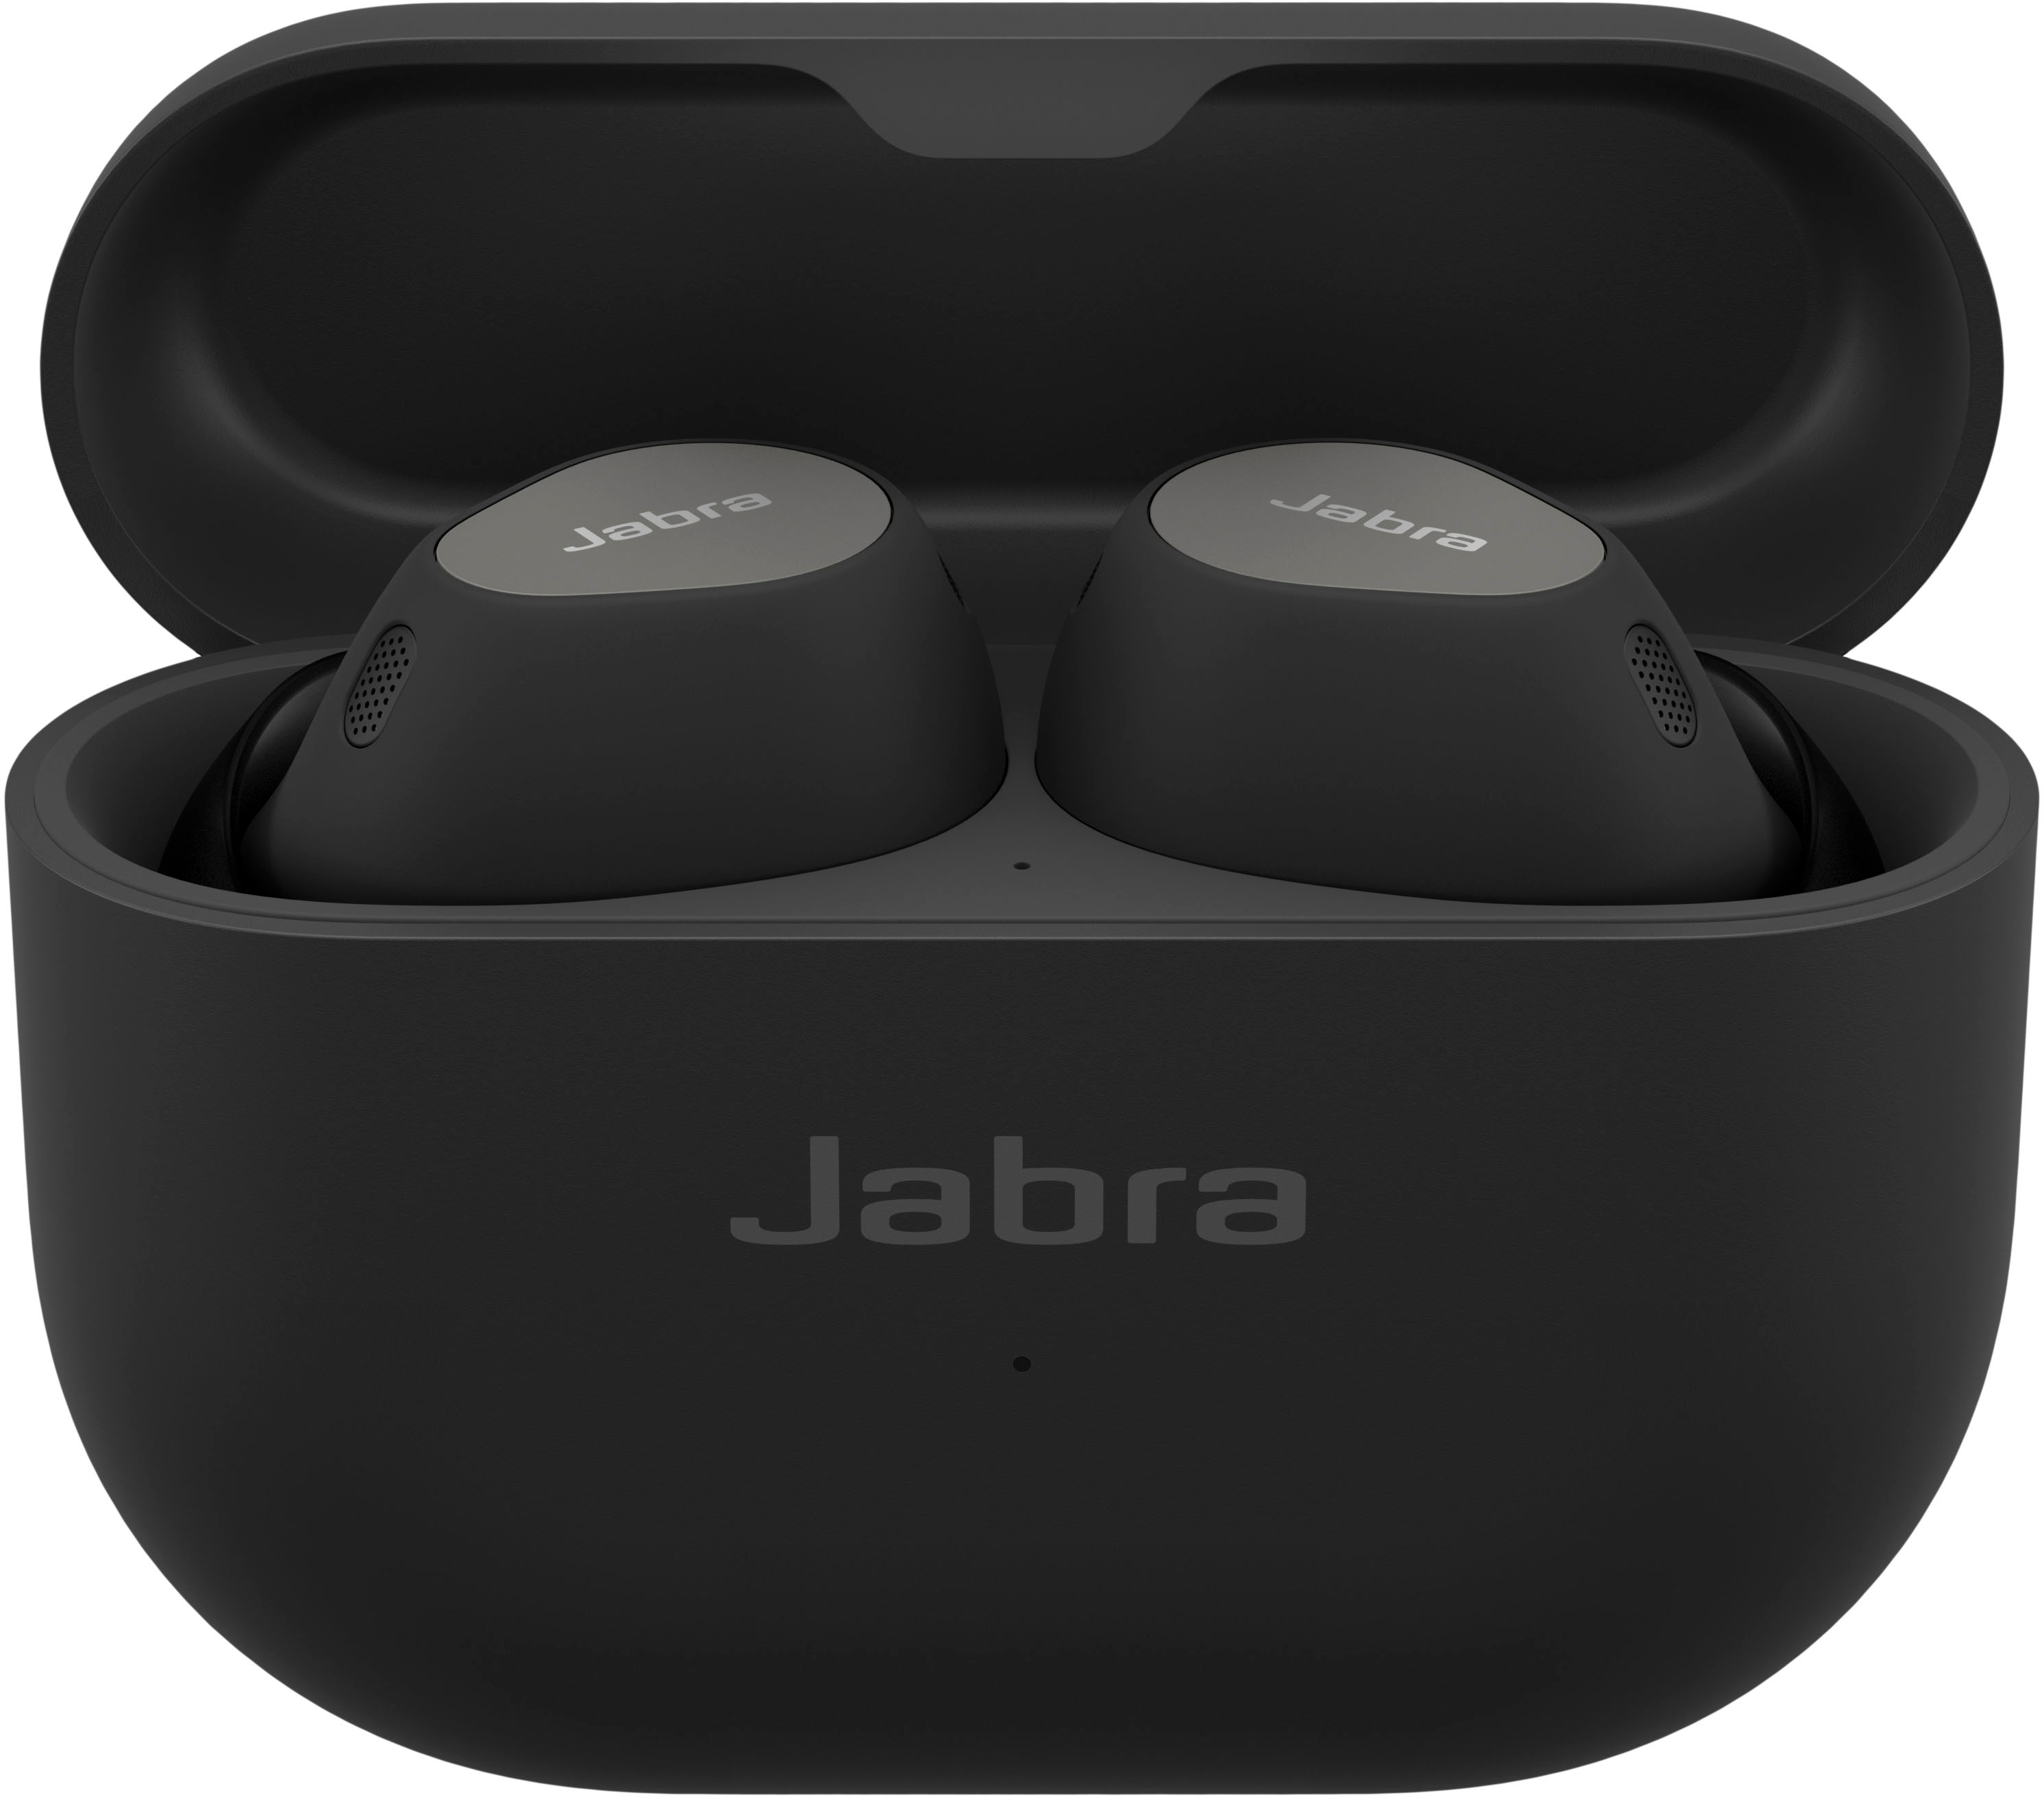 Jabra Elite 10 True Wireless Review 